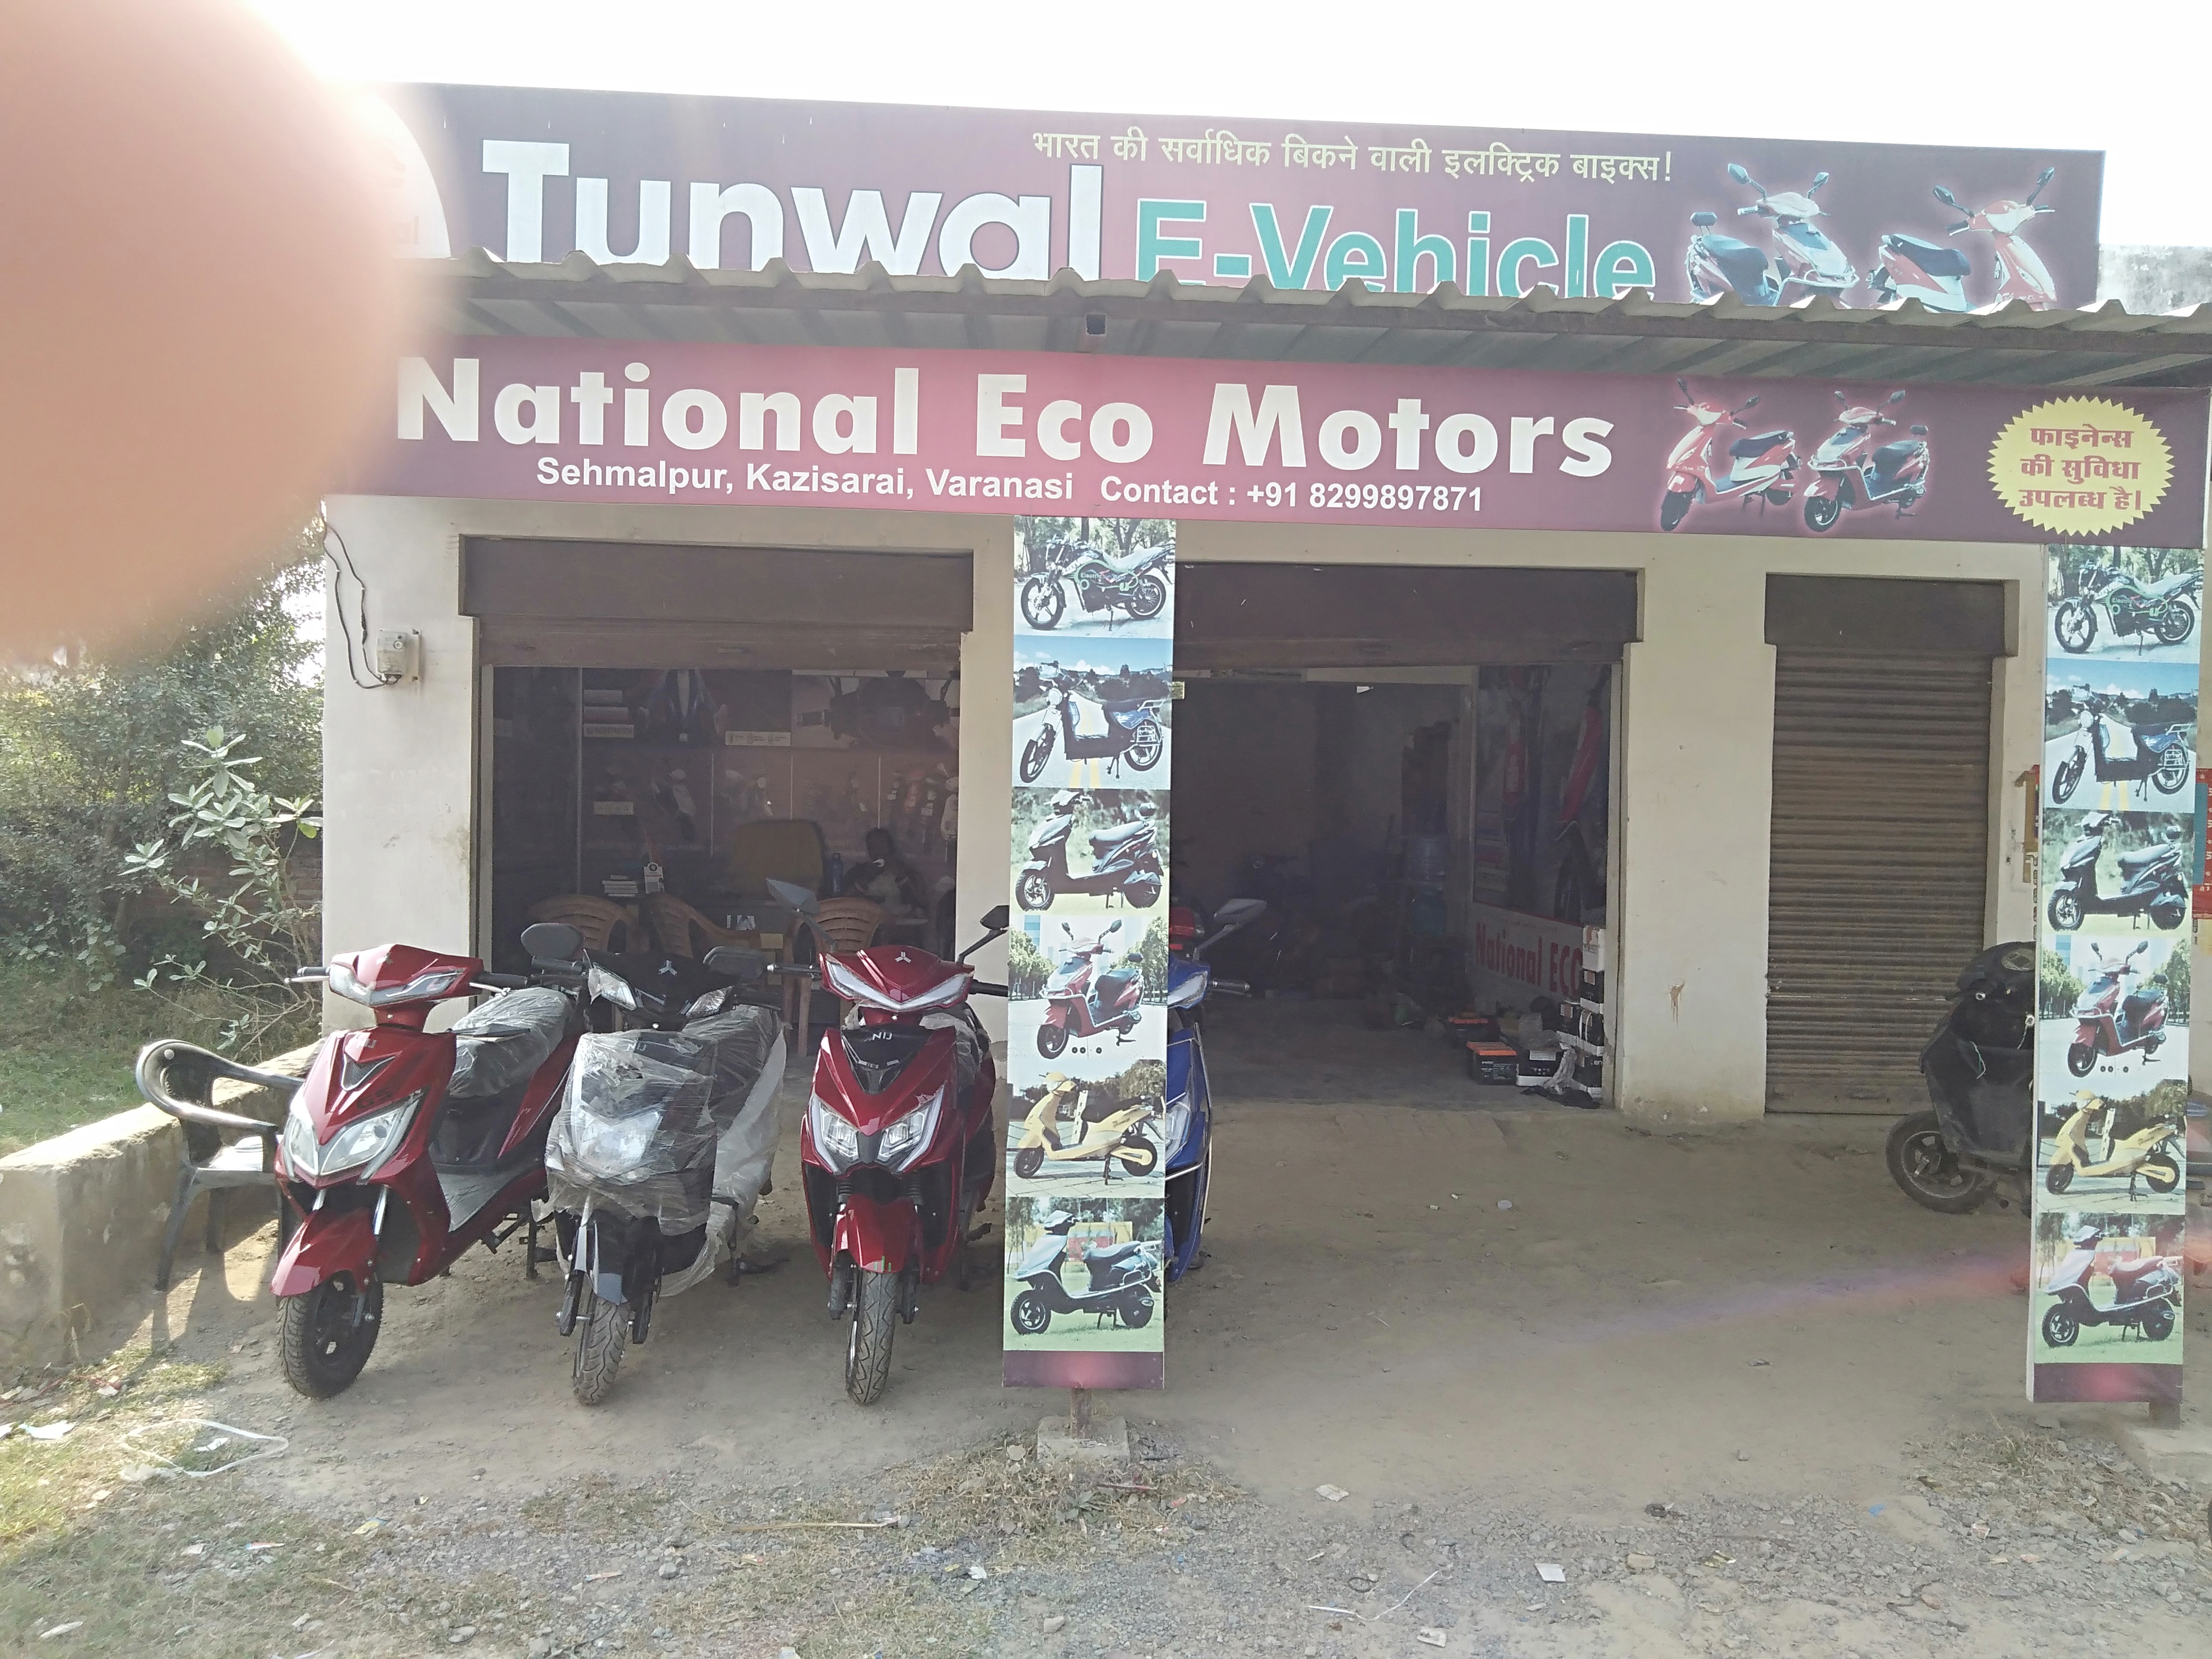 National eco Motors 